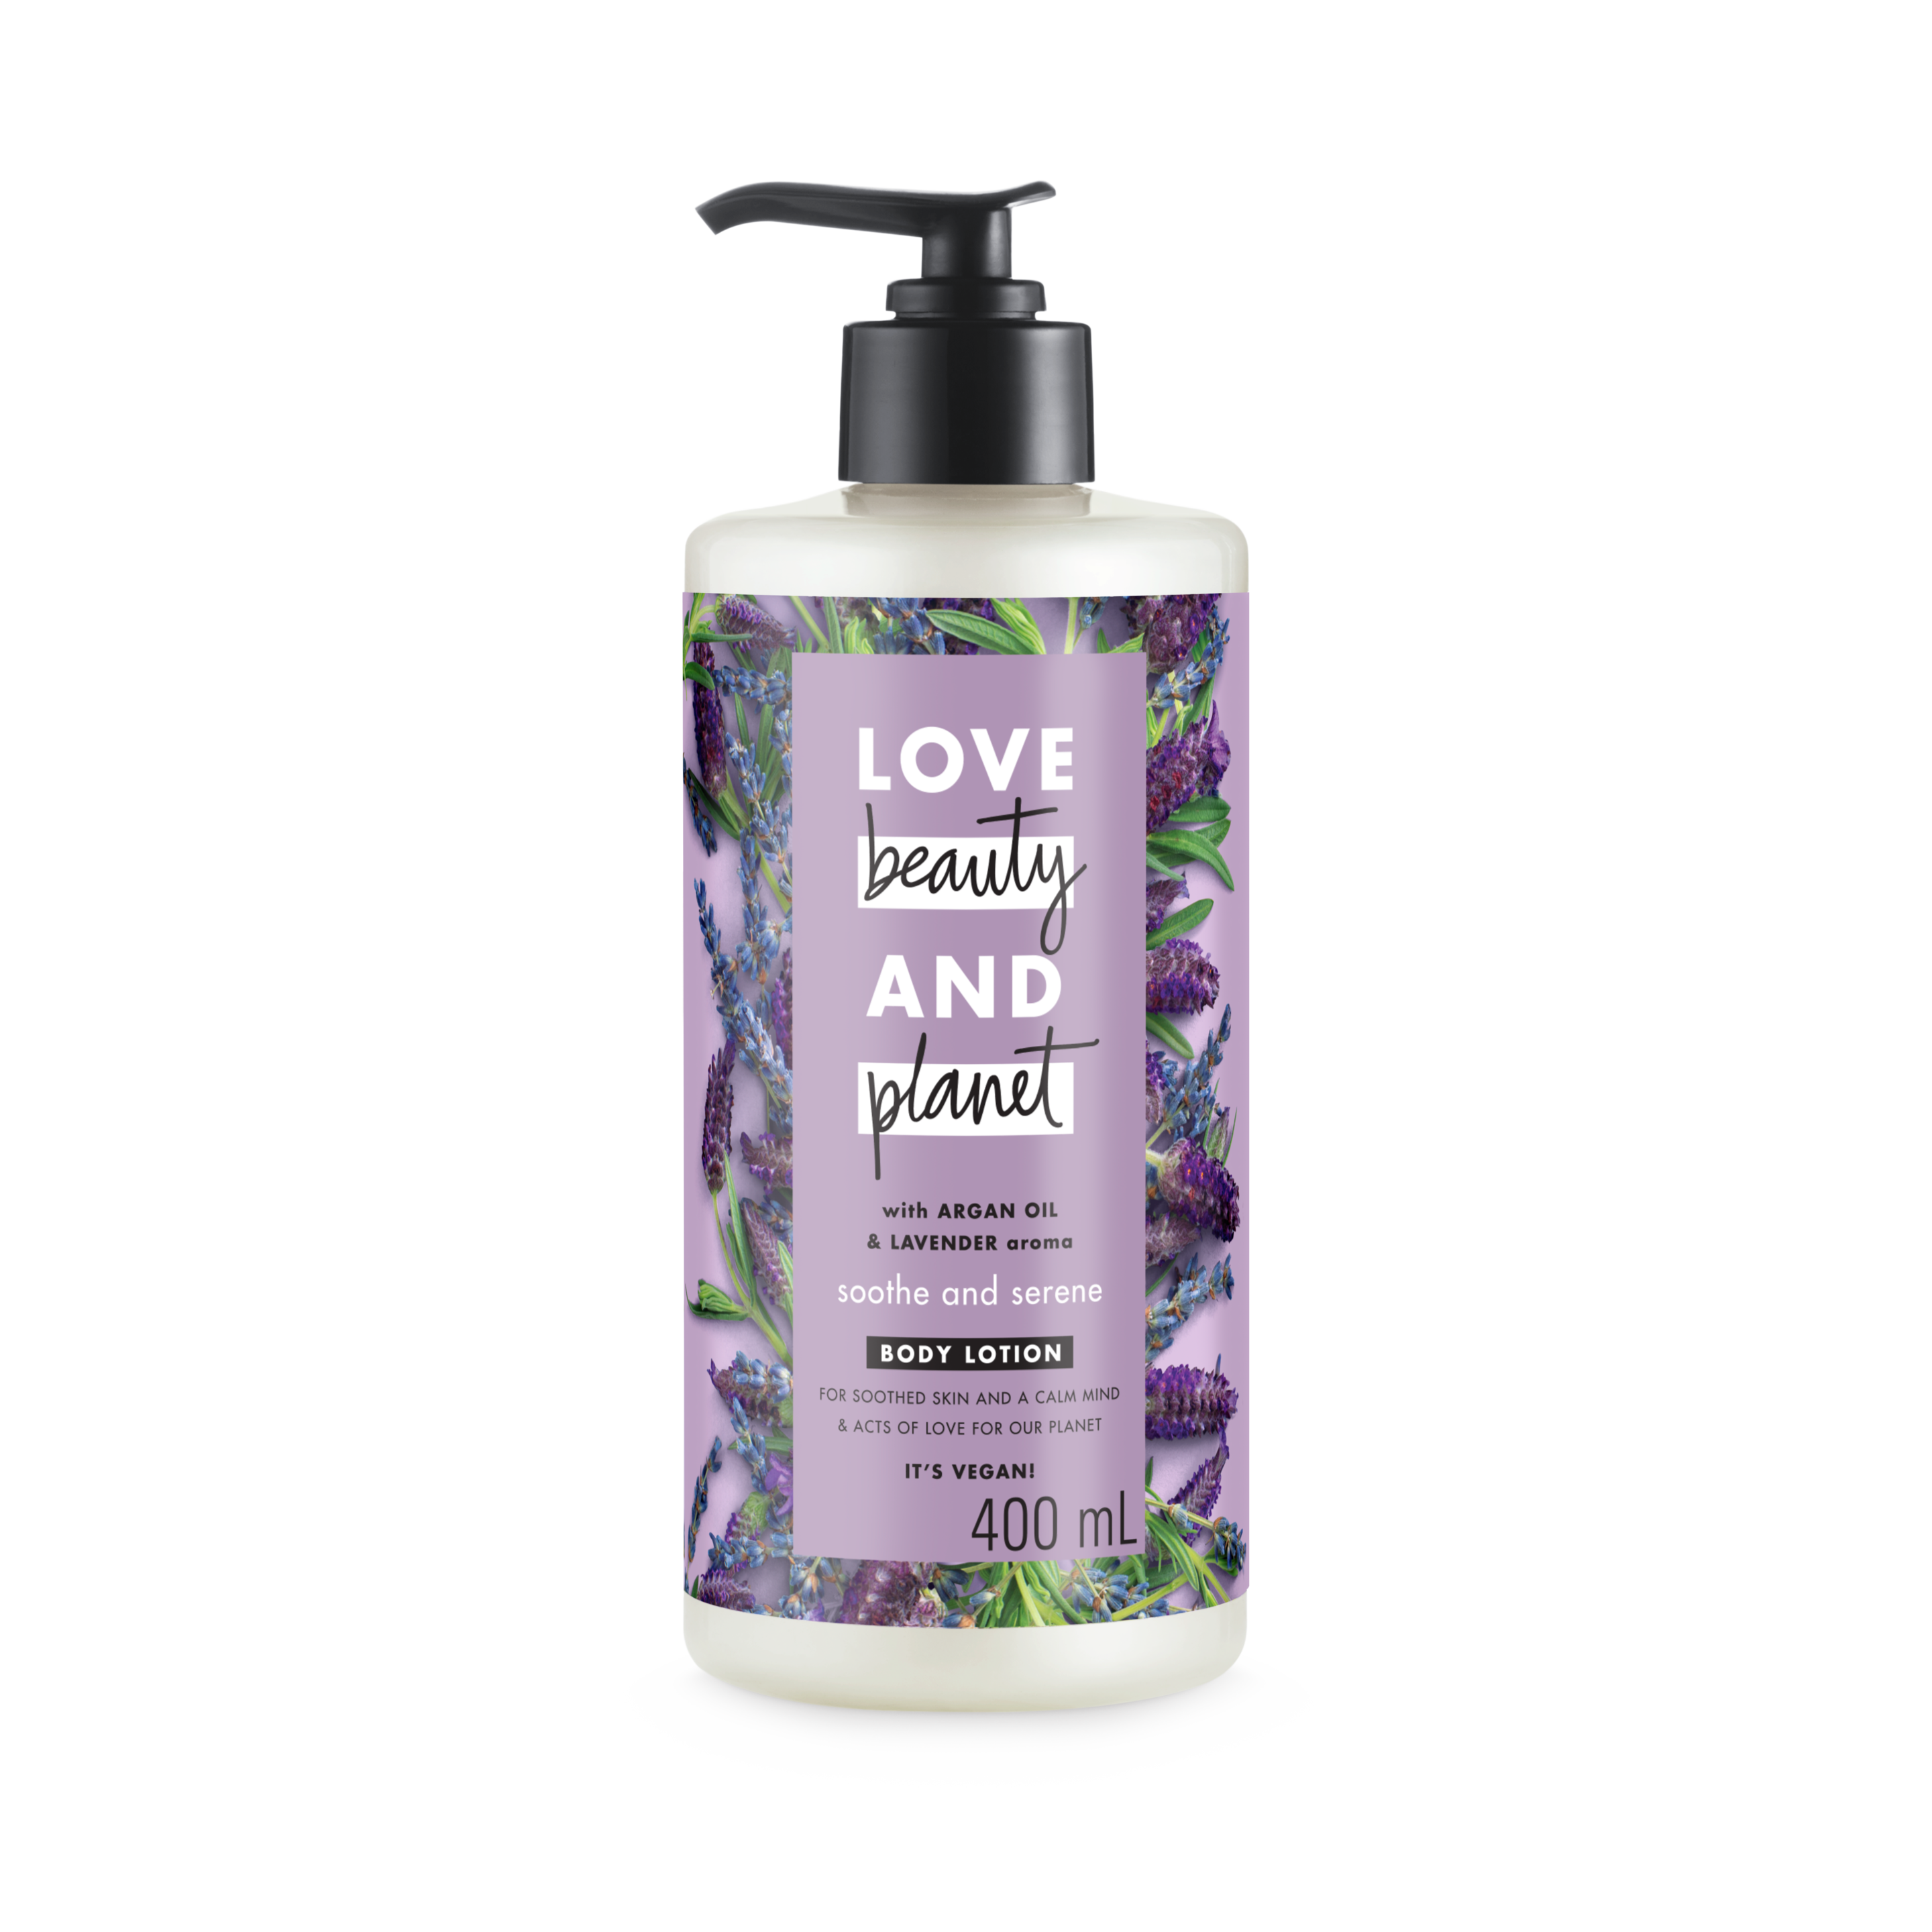 Bagian belakang kemasan Love Beauty and Planet Argan Oil & Lavender Body Lotion ukuran 400 ml Text